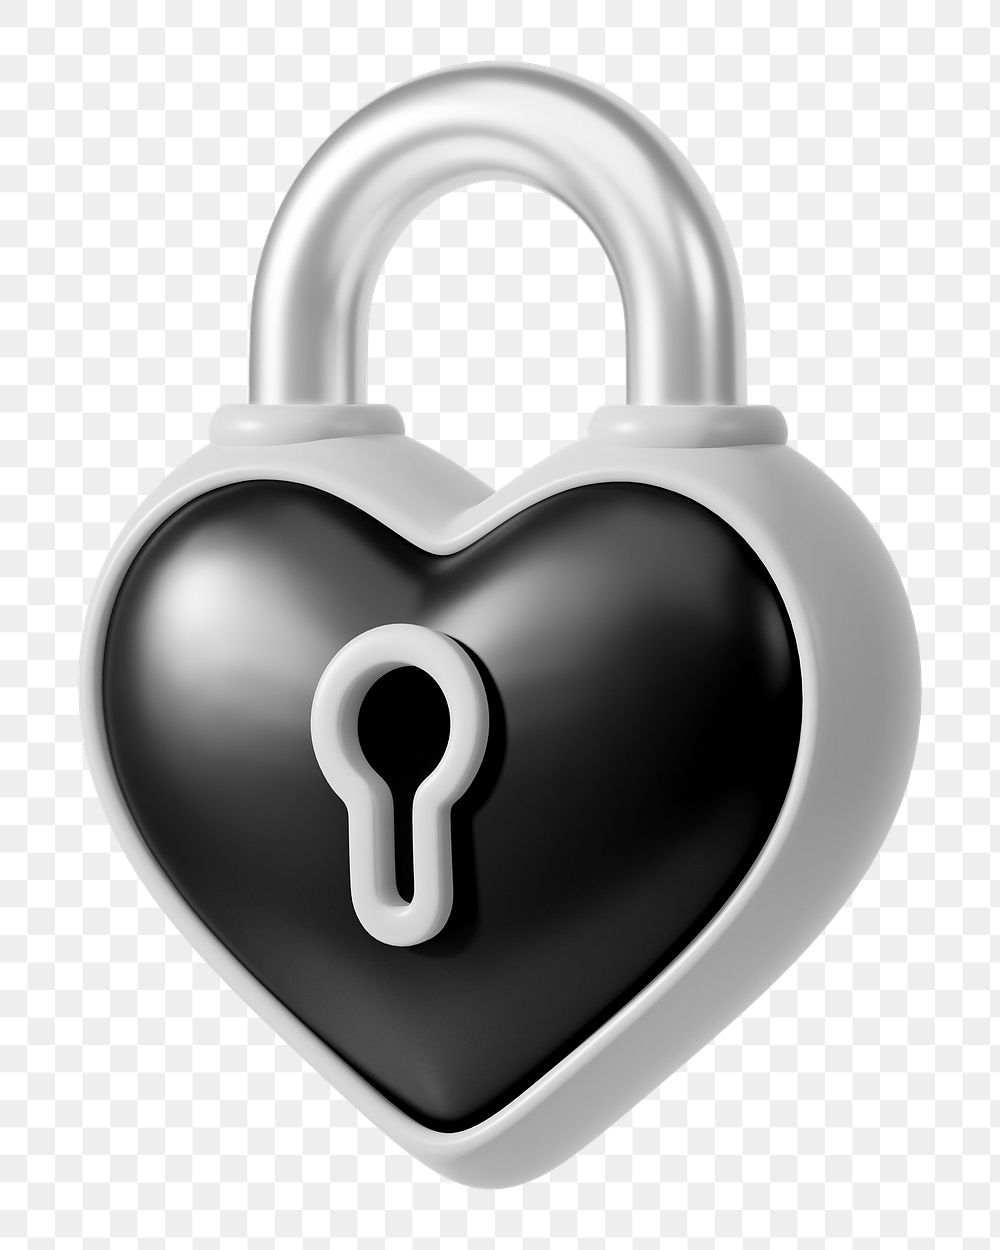 Black heart padlock png 3D element, transparent background